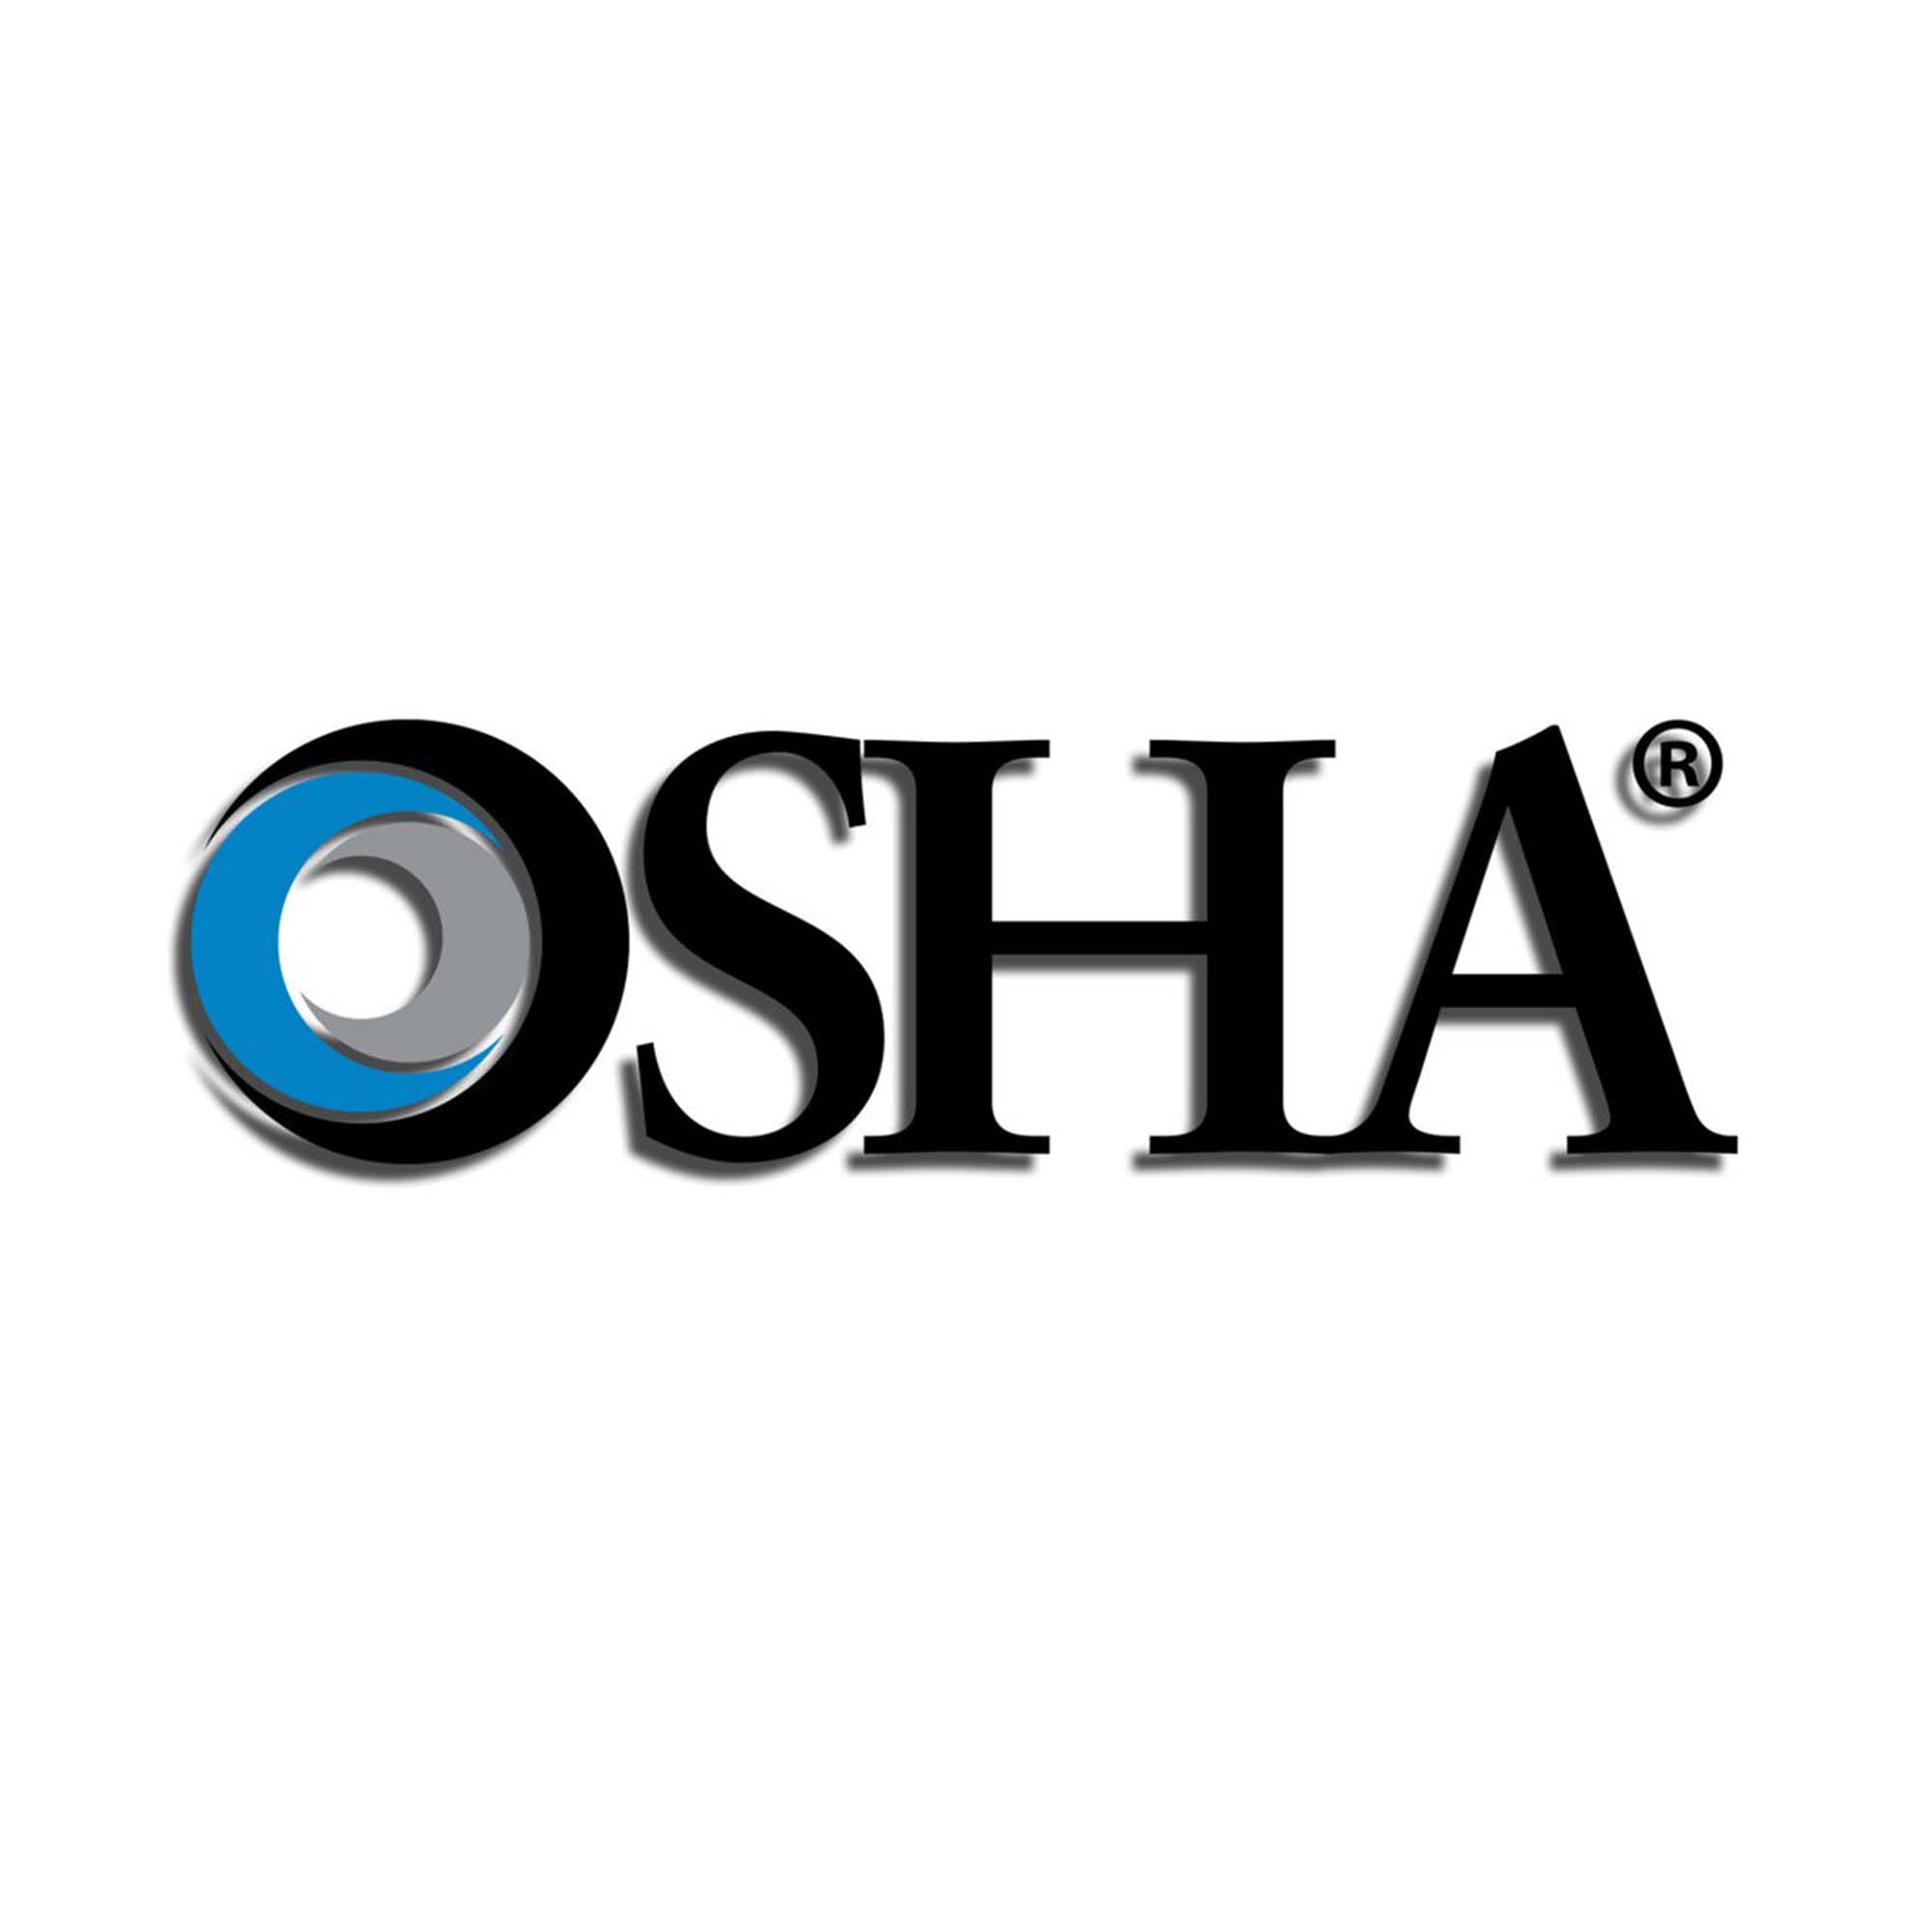 Osha logo